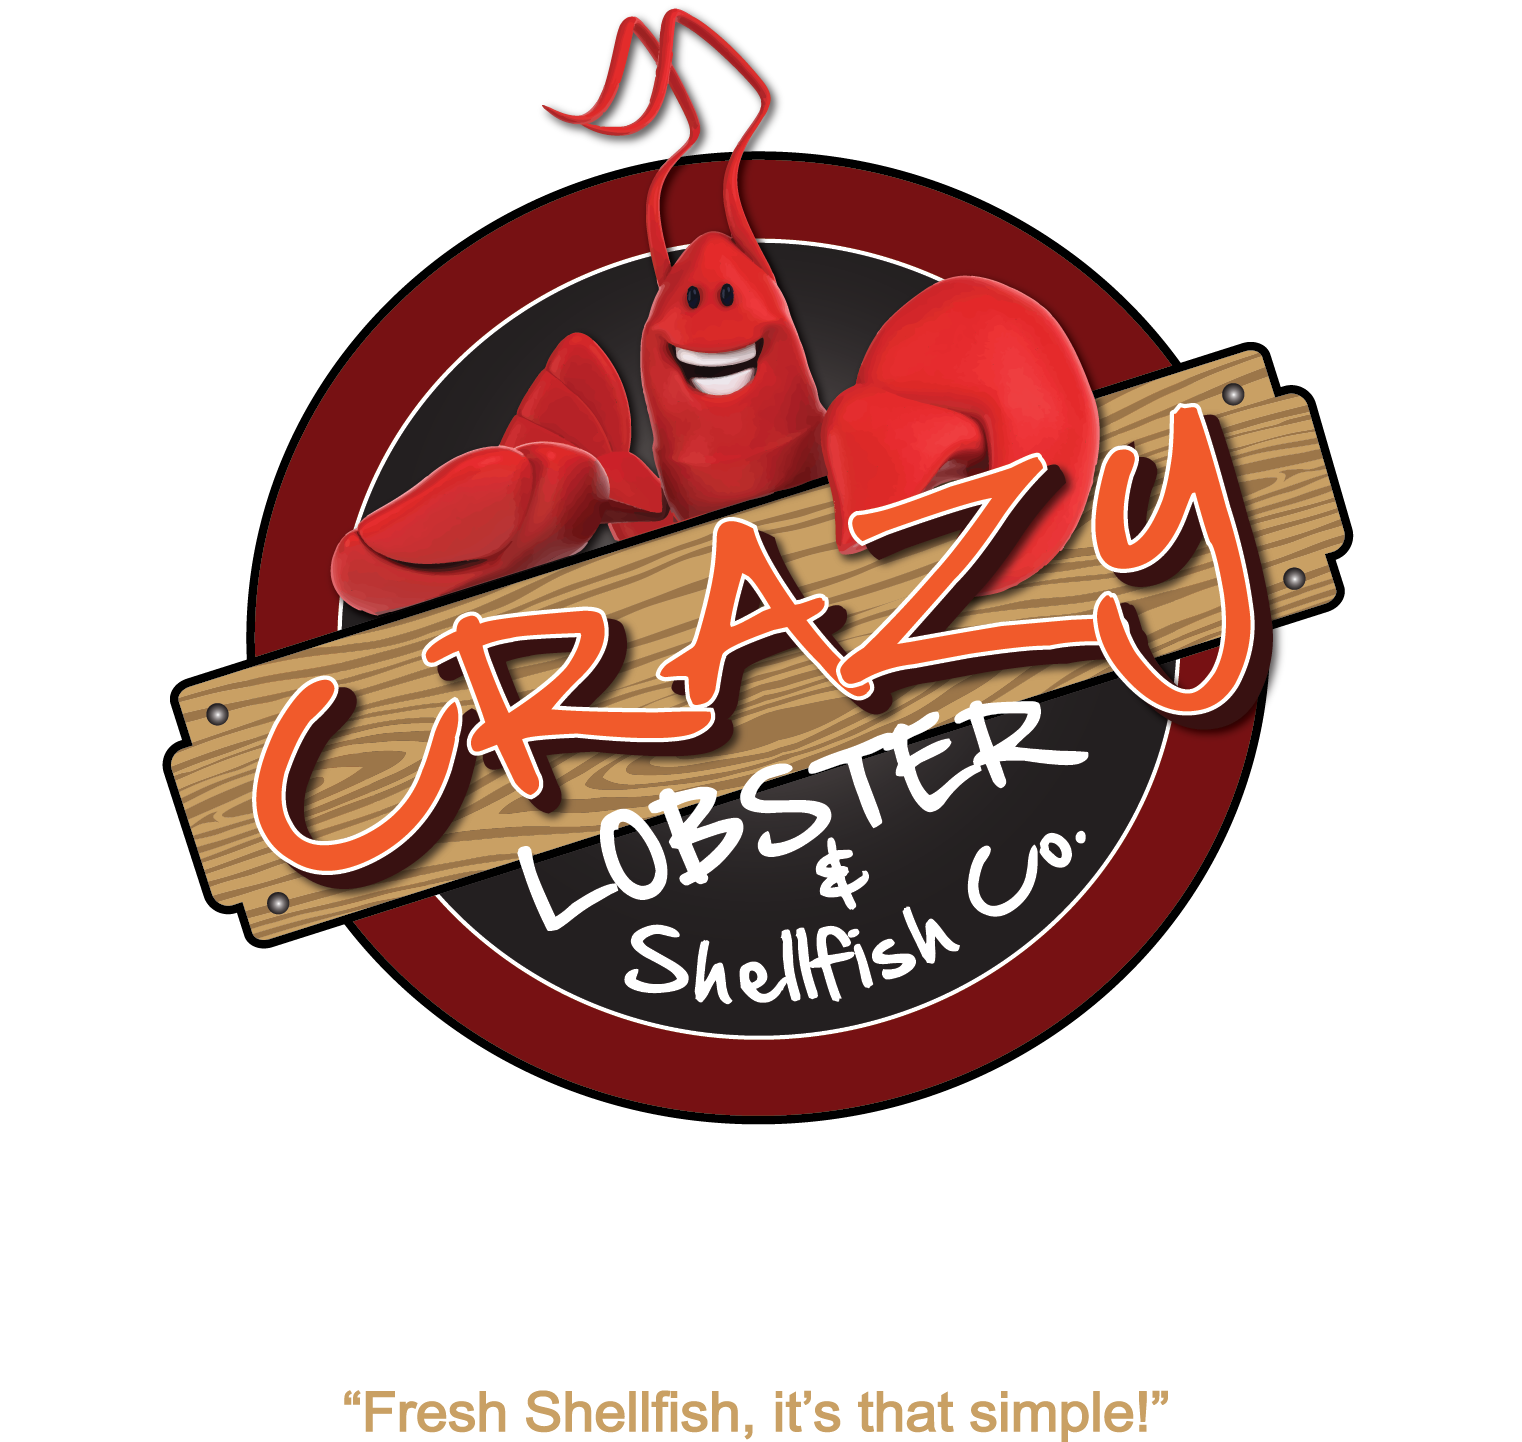 crazy lobster & shellfish co. logo